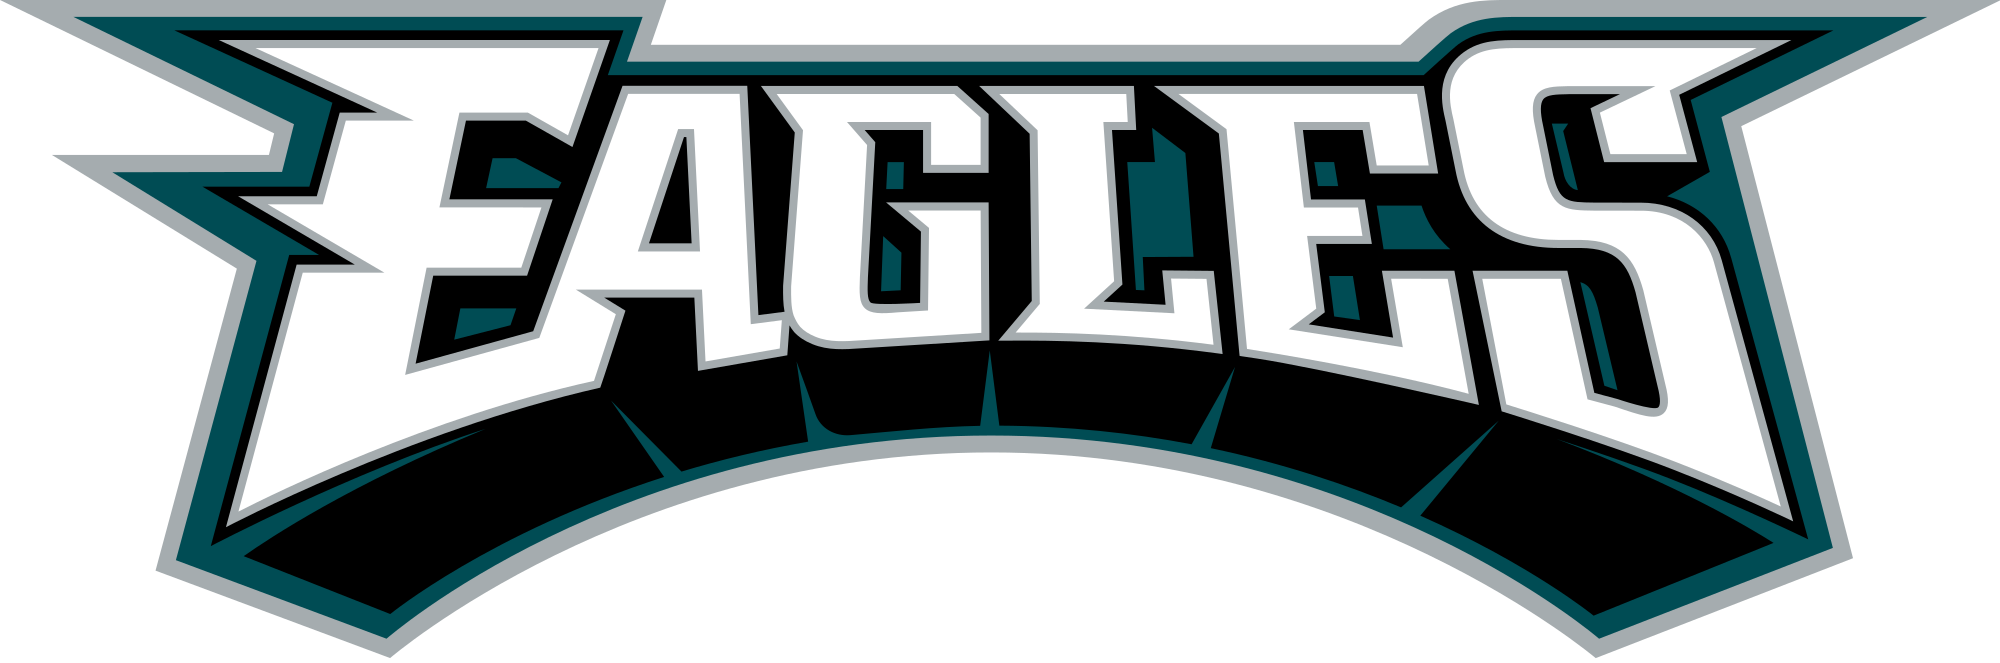 Philadelphia Eagles Logo Png Clipart Transparent Download - Philadelphia Eagles Logo 2017 (2000x663), Png Download